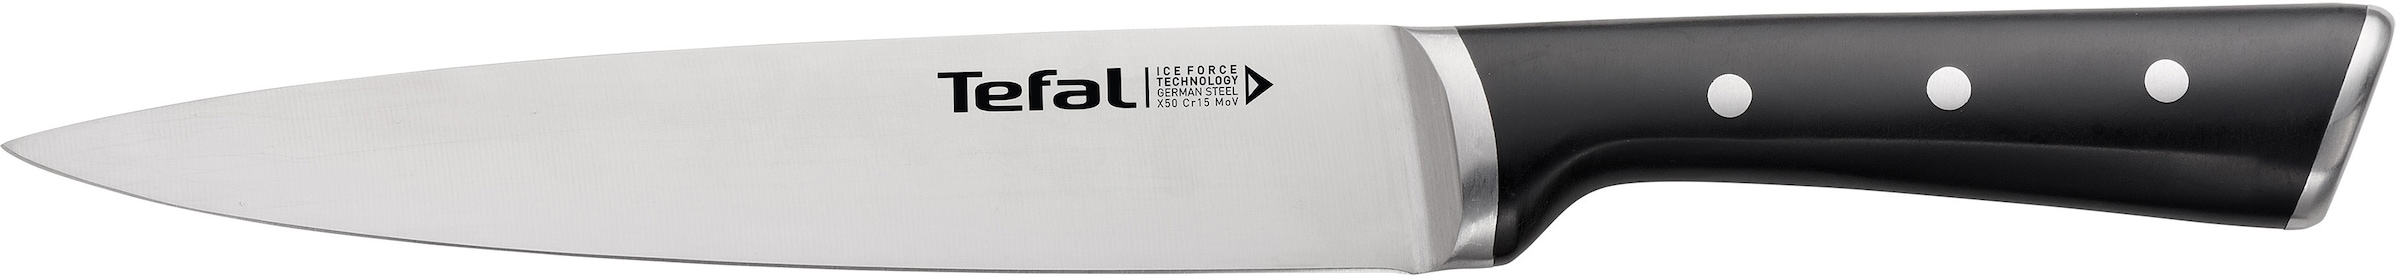 Bratpfanne BAUR Tefal bestellen + »Ultimate Ice 2-teilig On Force«, |